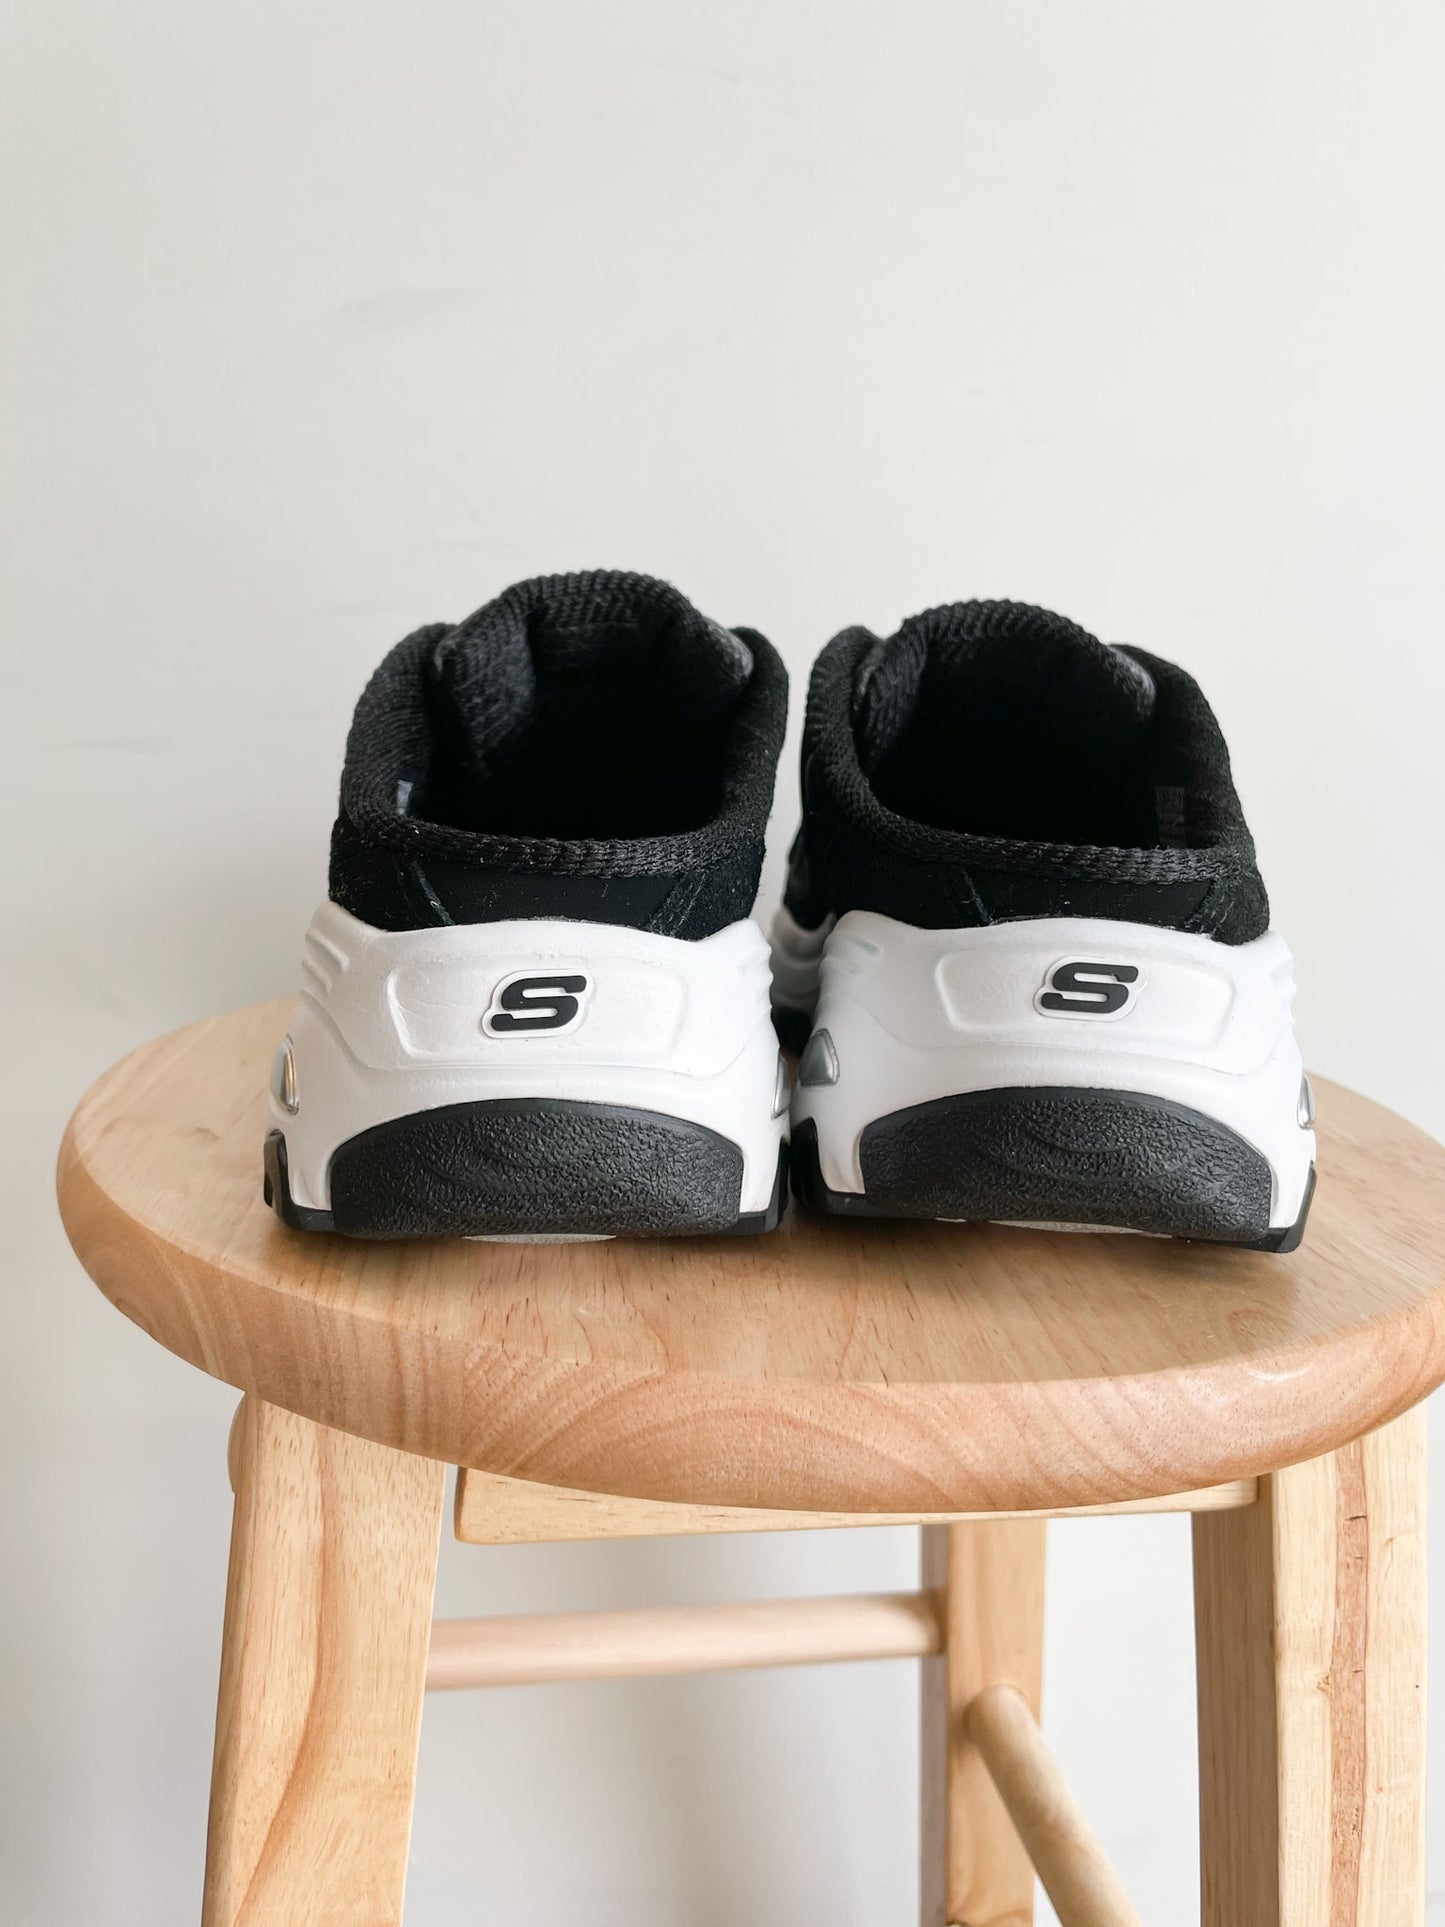 Sketchers Black D'Lites Slip On Sneaker Shoes NWT - Size 7.5